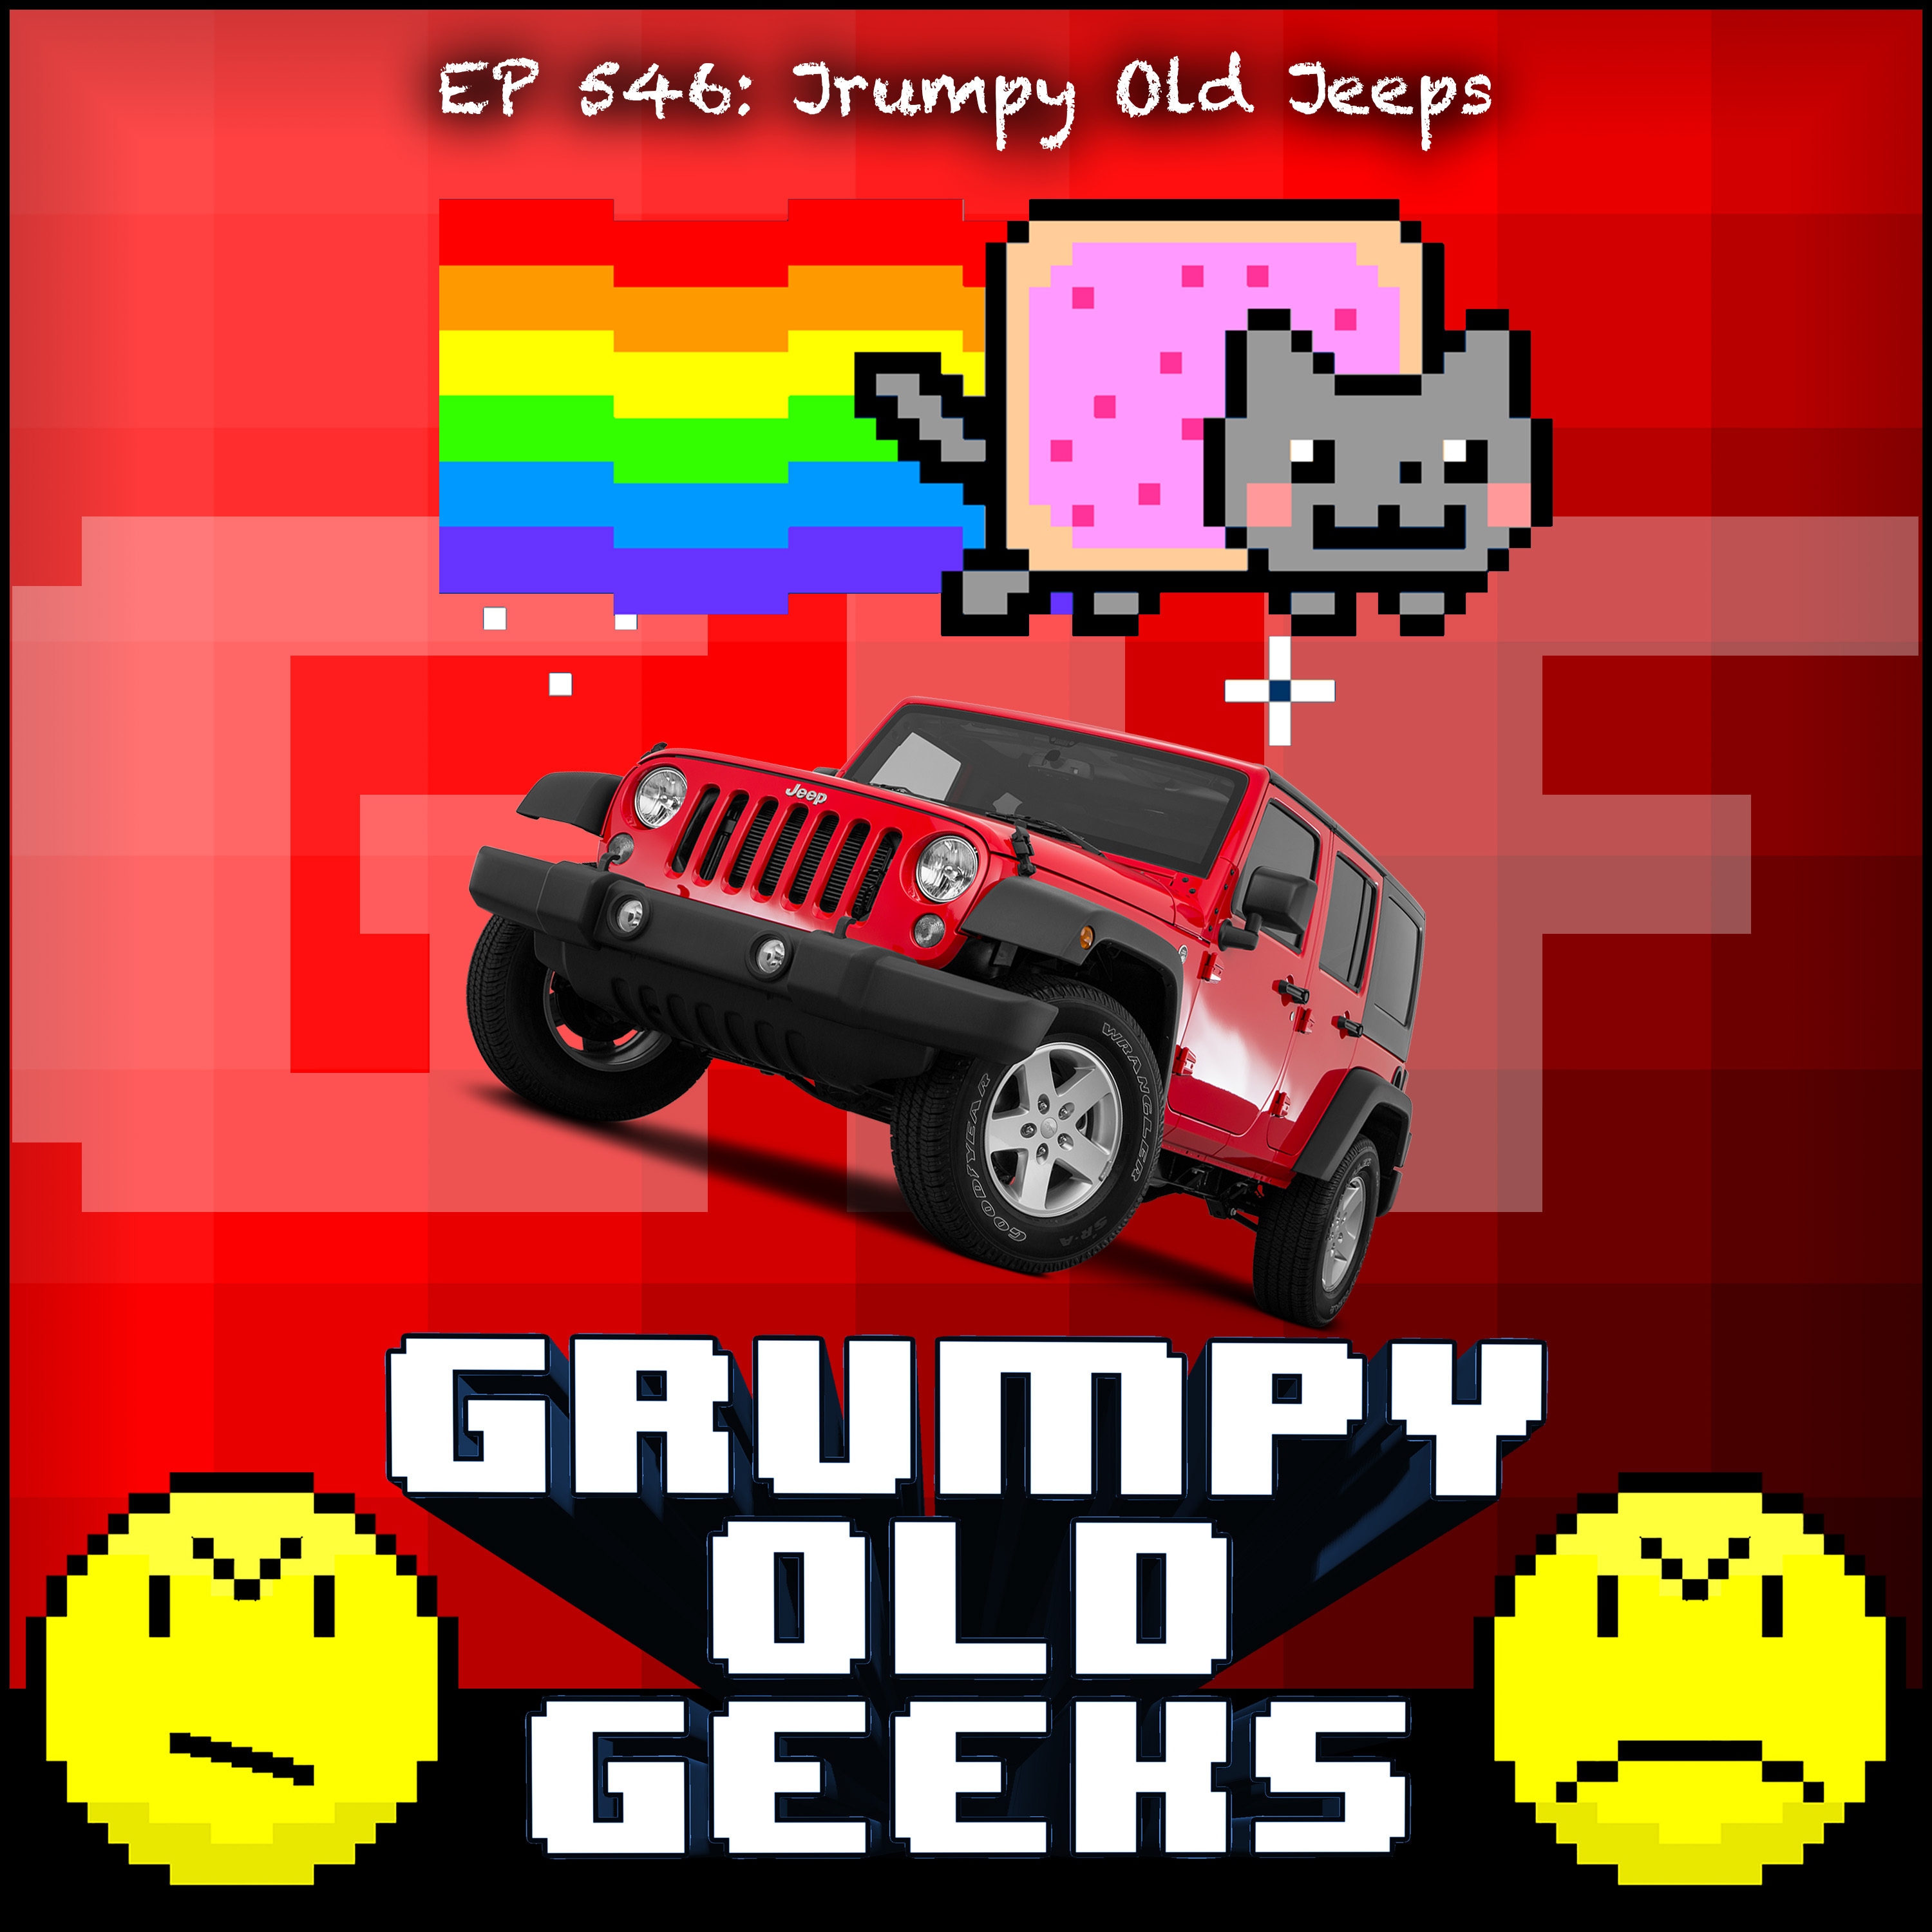 546: Jrumpy Old Jeeps Image